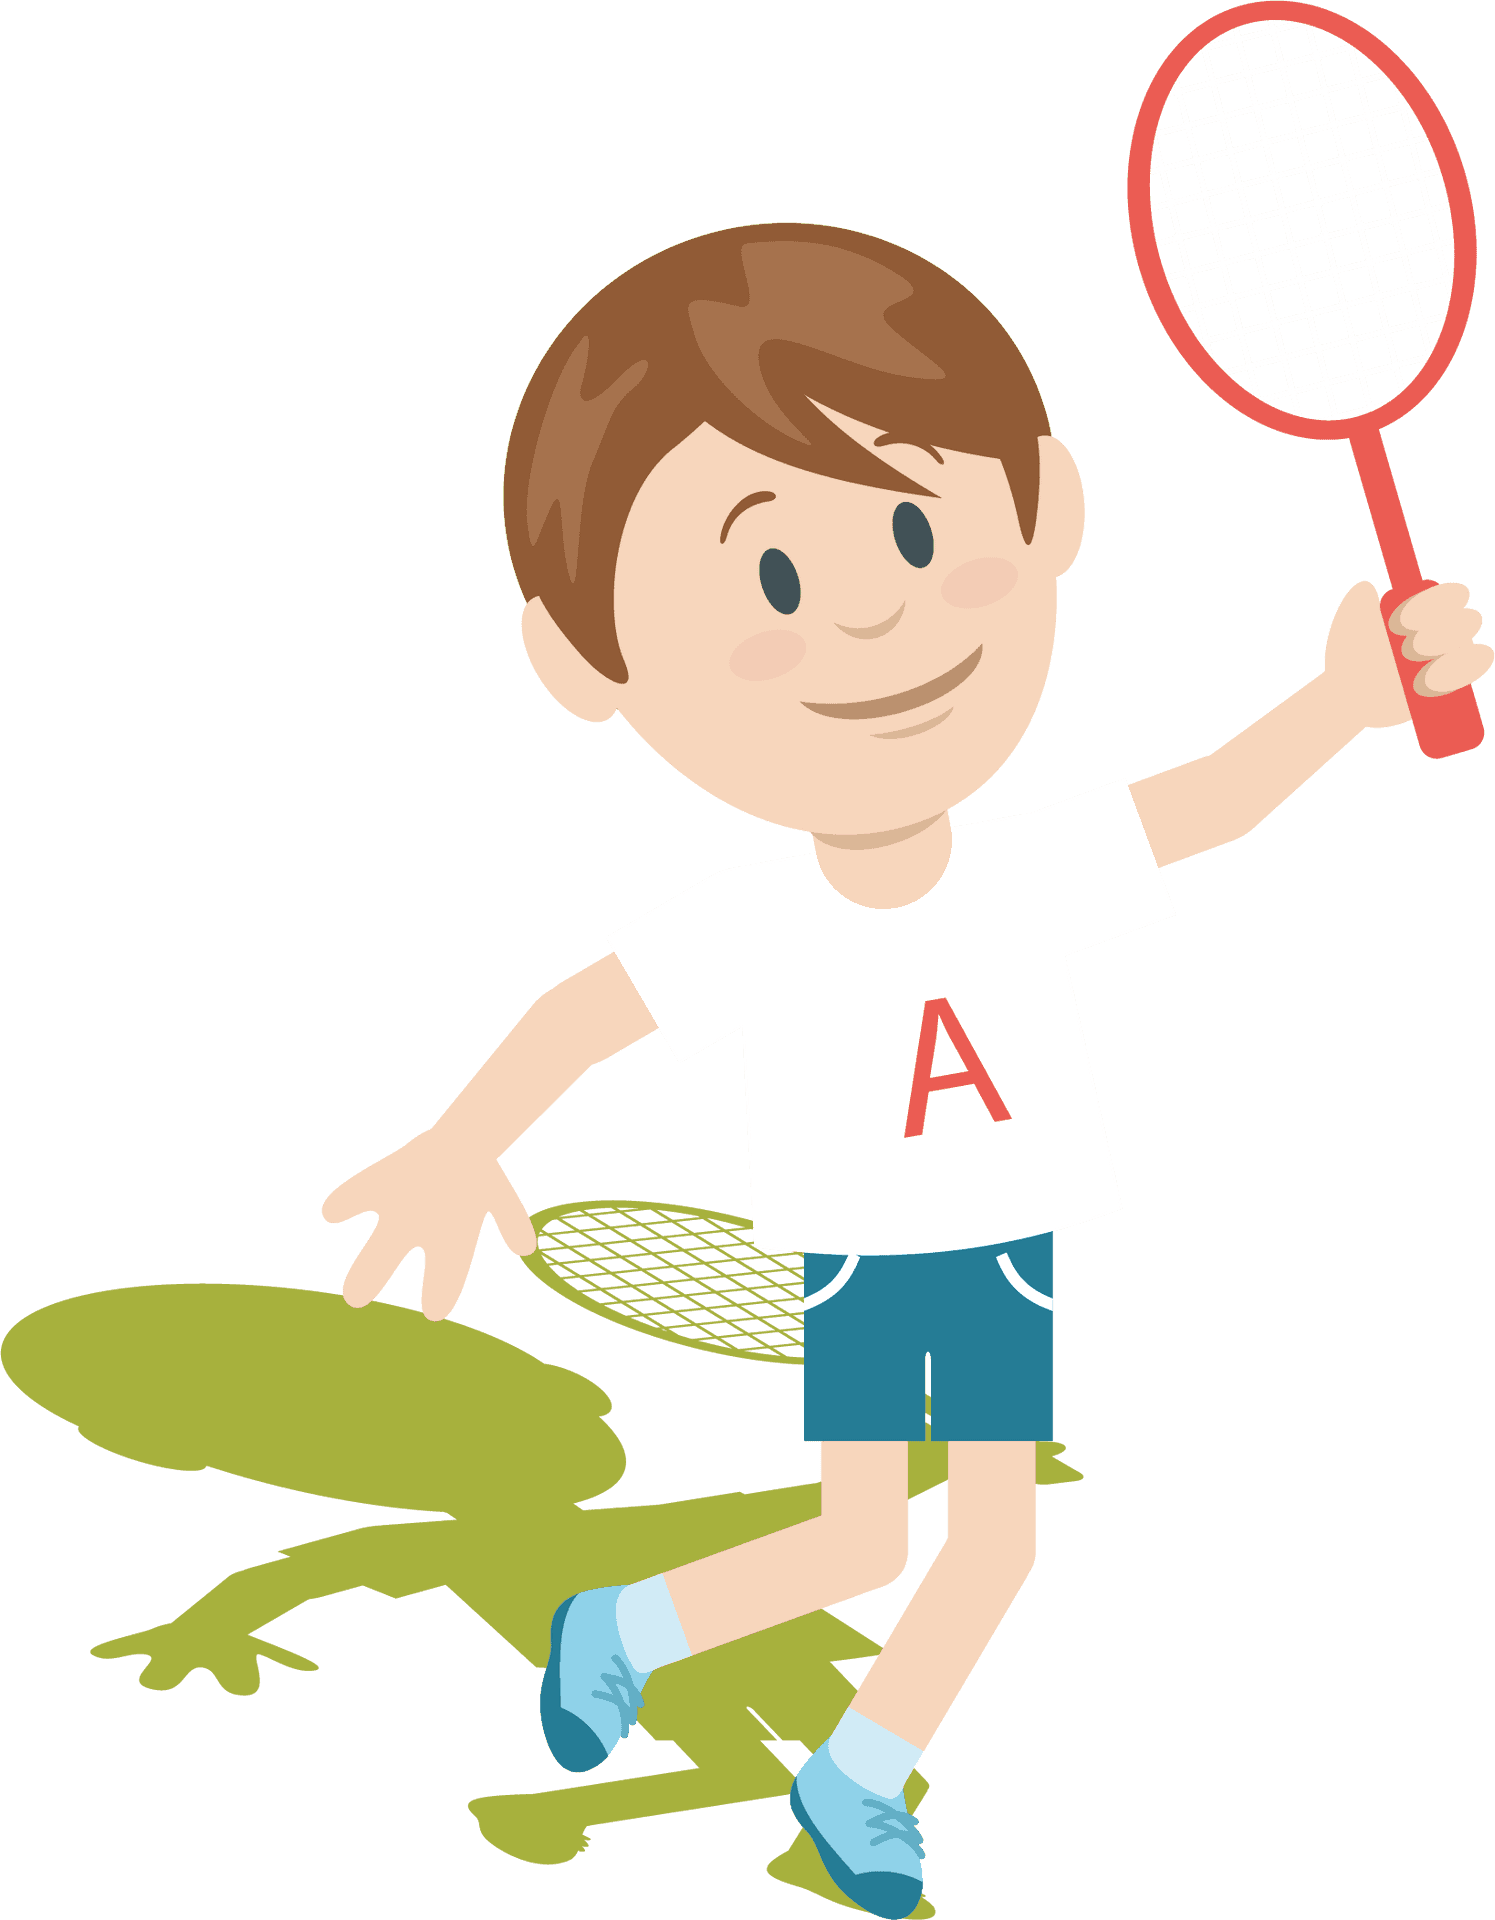 Young Boy Playing Badminton Cartoon PNG image